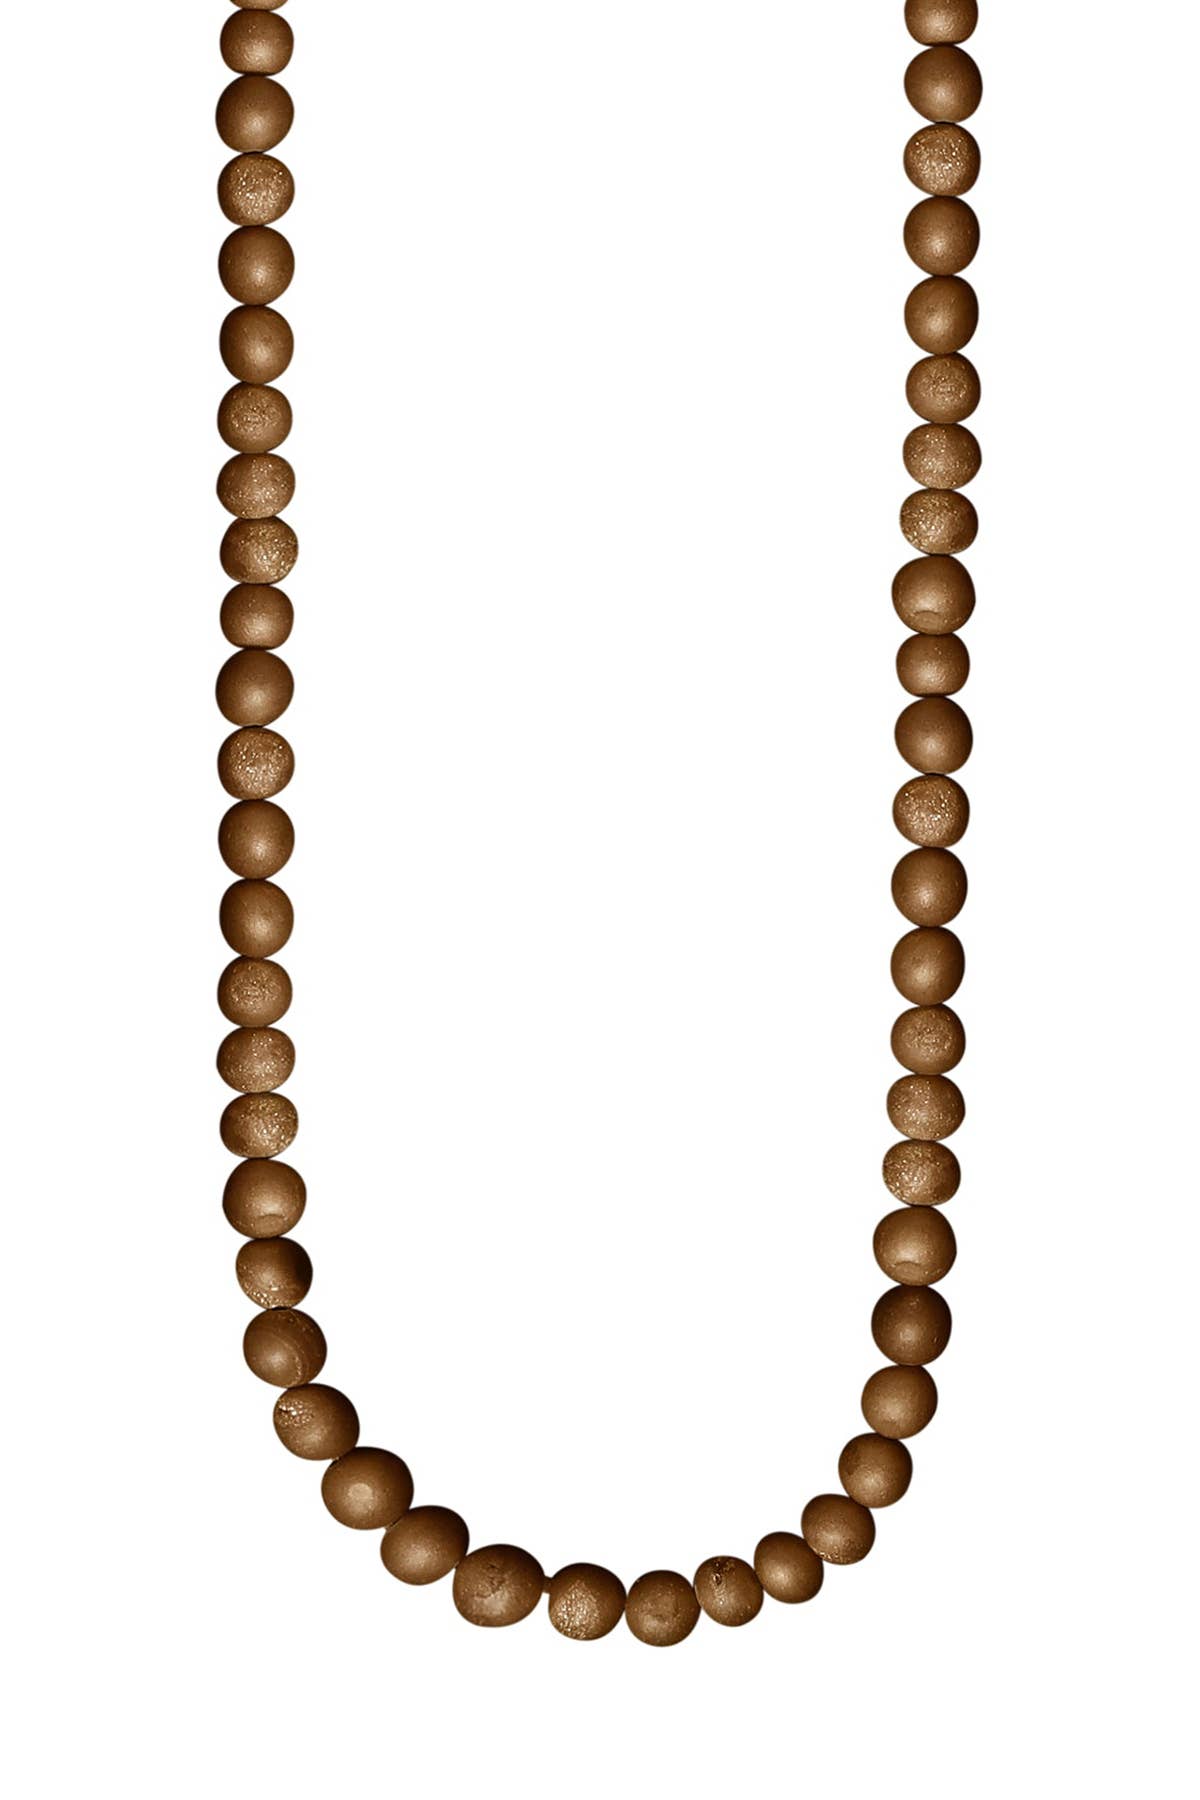 Sterling Silver & Brown Druzy Quartz Mala Beads Necklace - SS